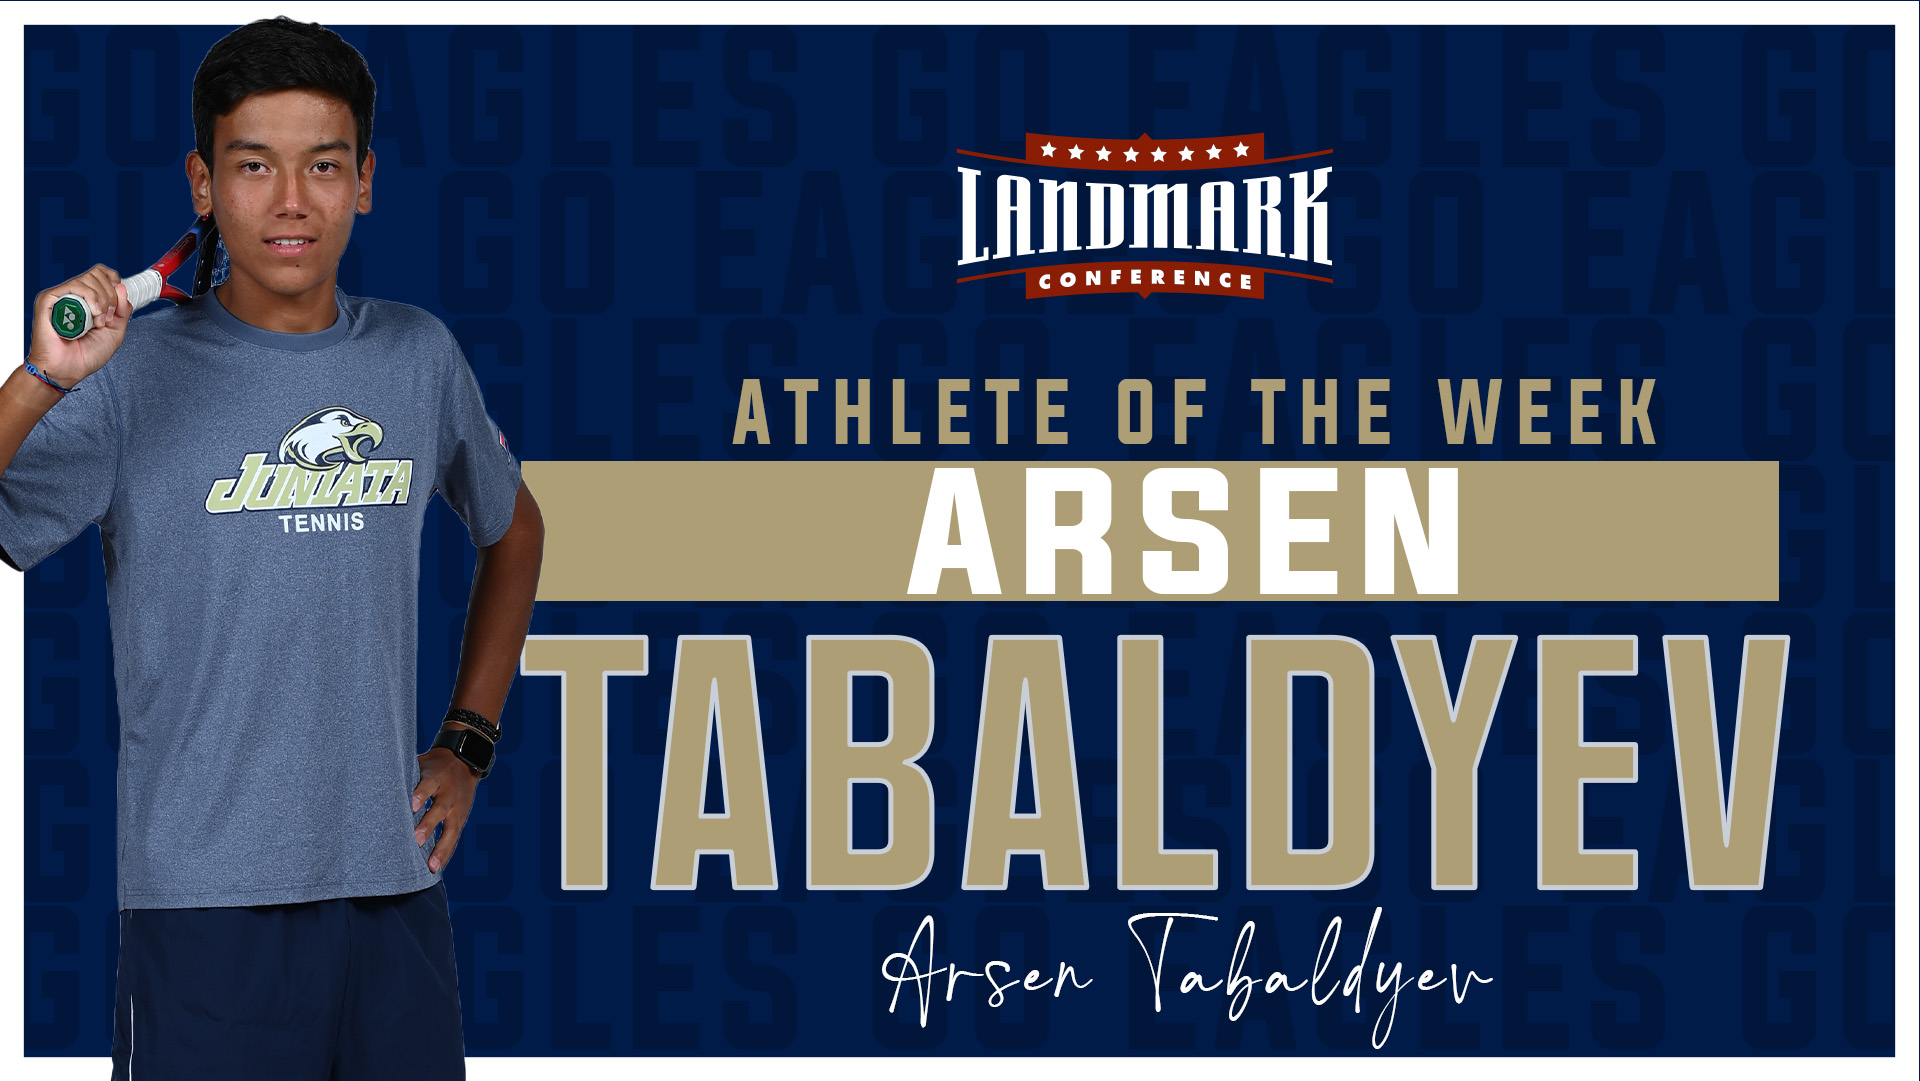 Tabaldyev Named Landmark Athlete of the Week